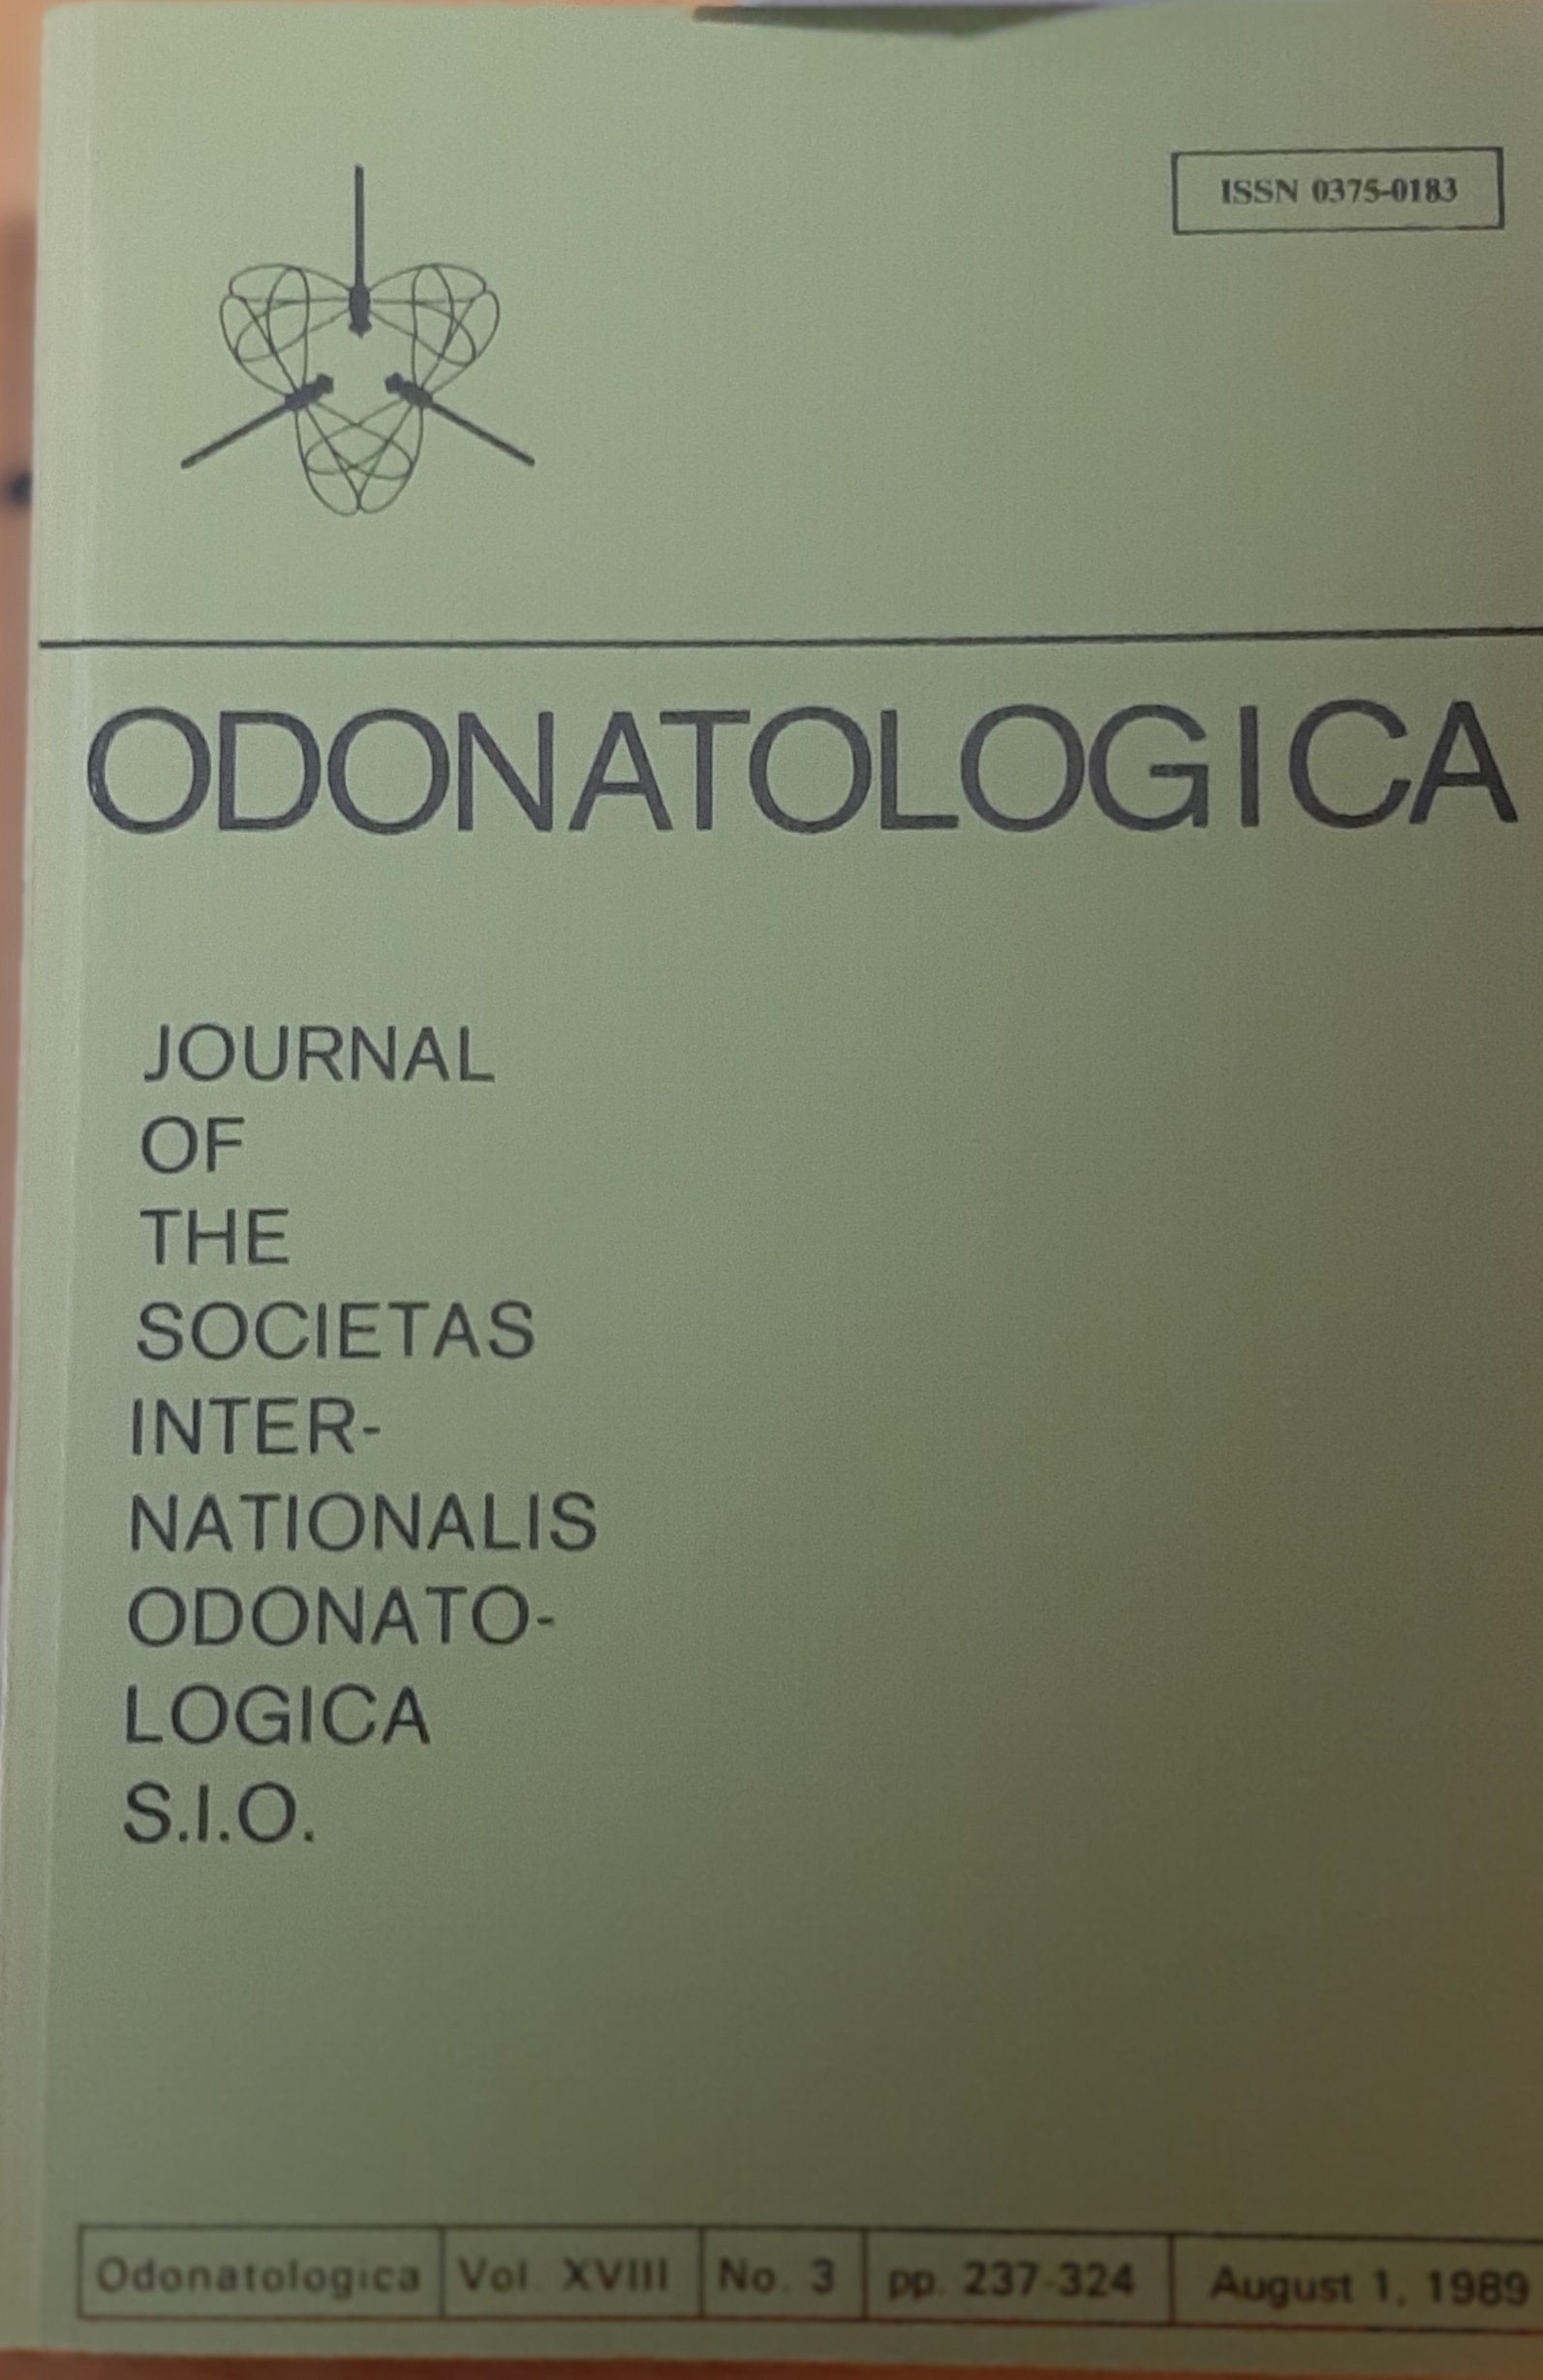 Odonatologica 1989/18. évf. 3. szám Journal of the Societas Internationalis Odonatologica S.I.O. (Rippl-Rónai Múzeum RR-F)